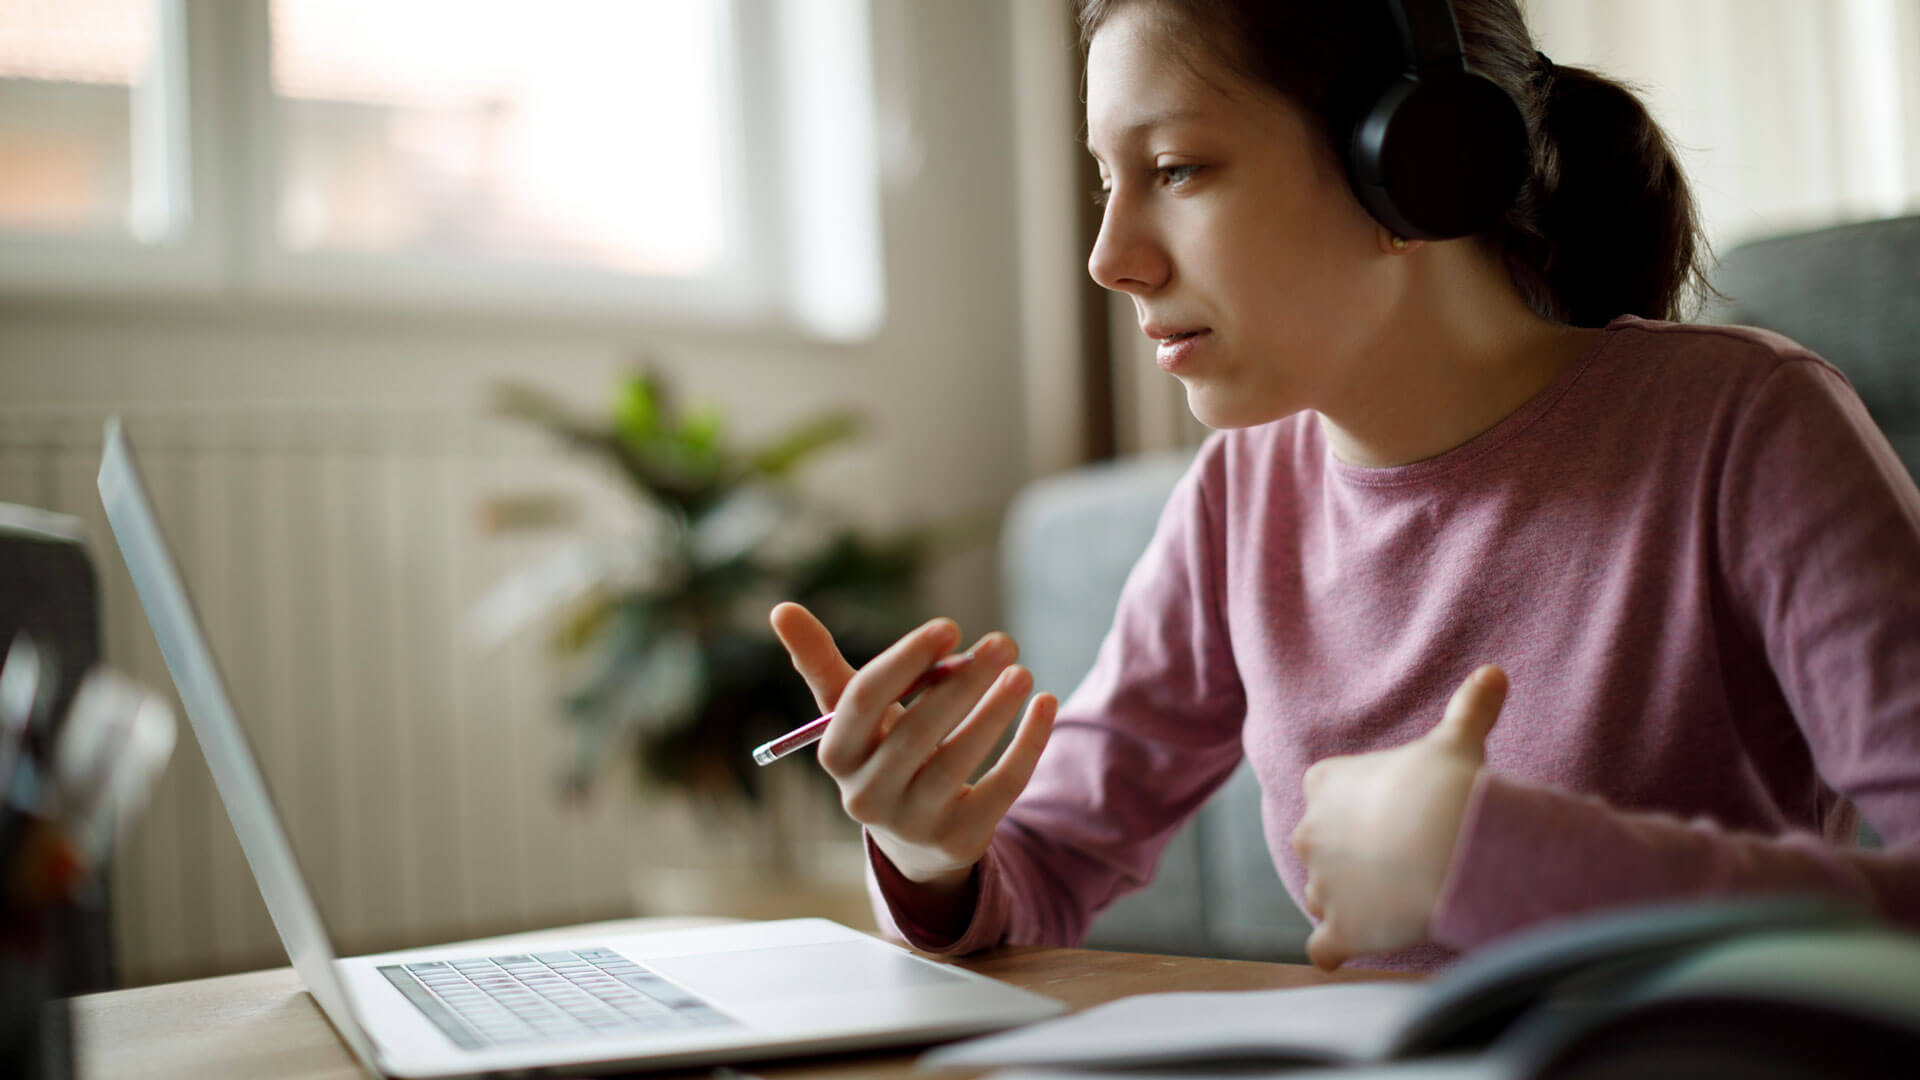 teen using a laptop wearing headphones